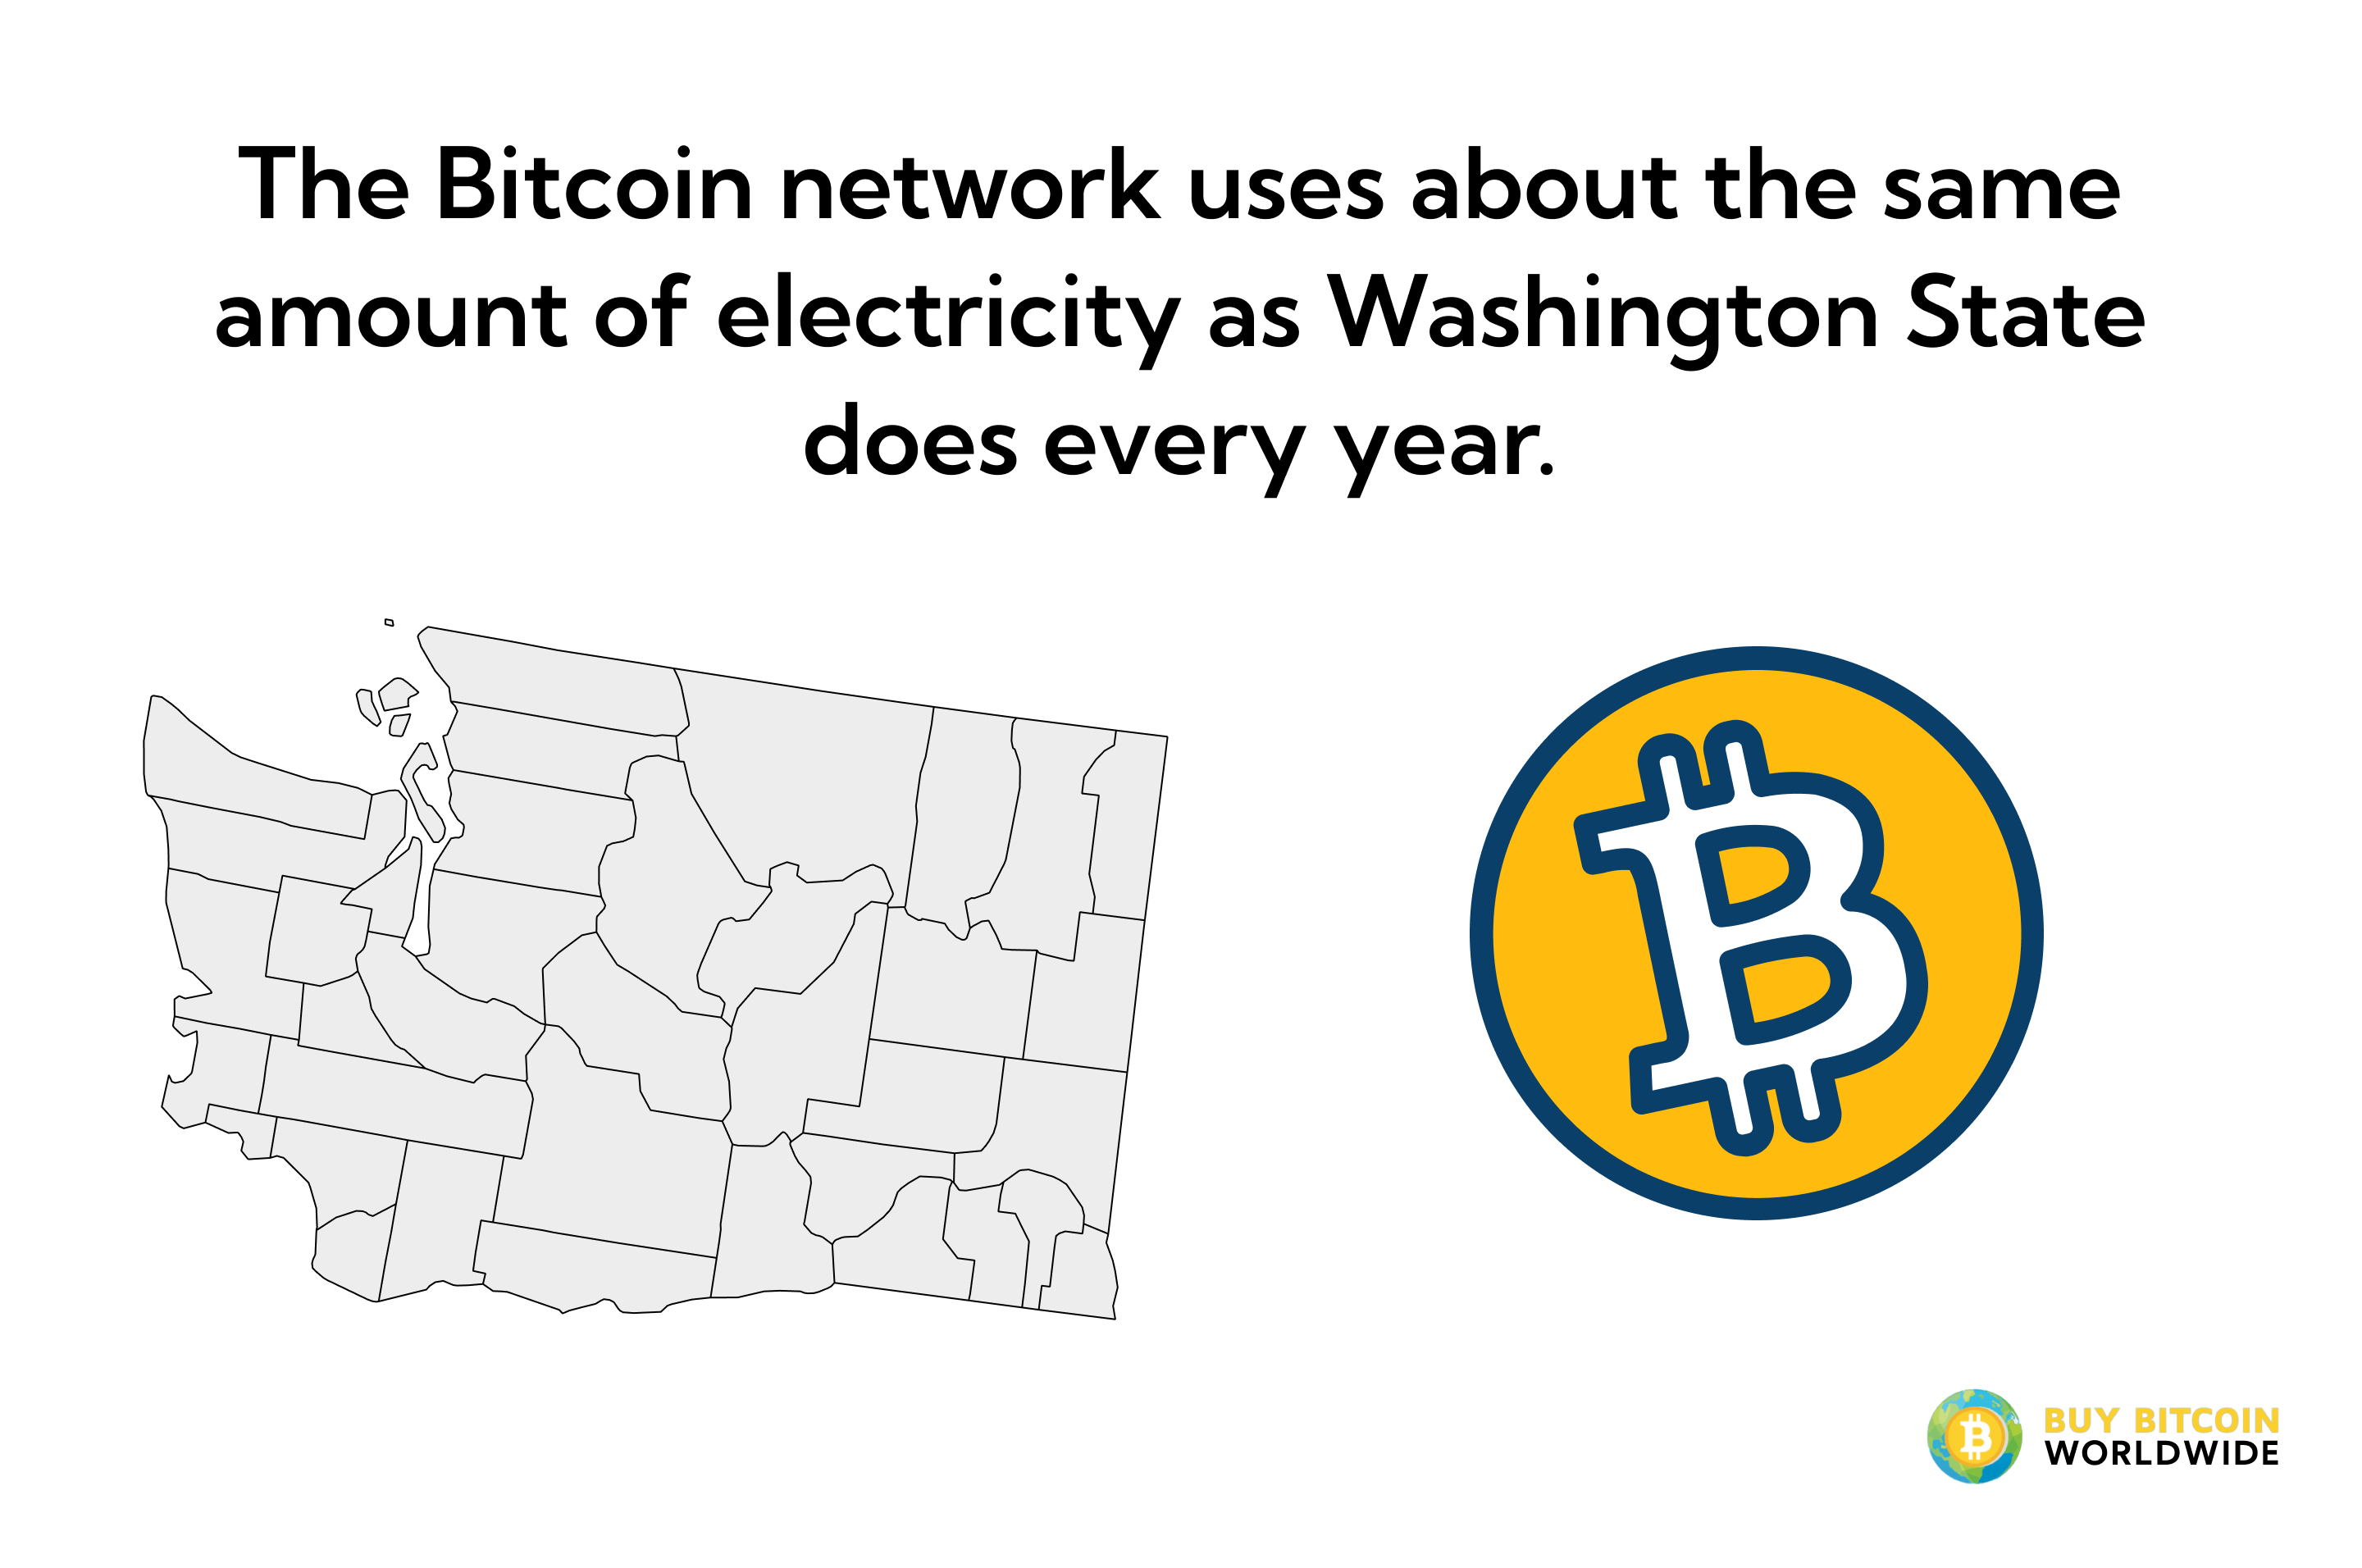 bitcoin electricity consumption vs washington state